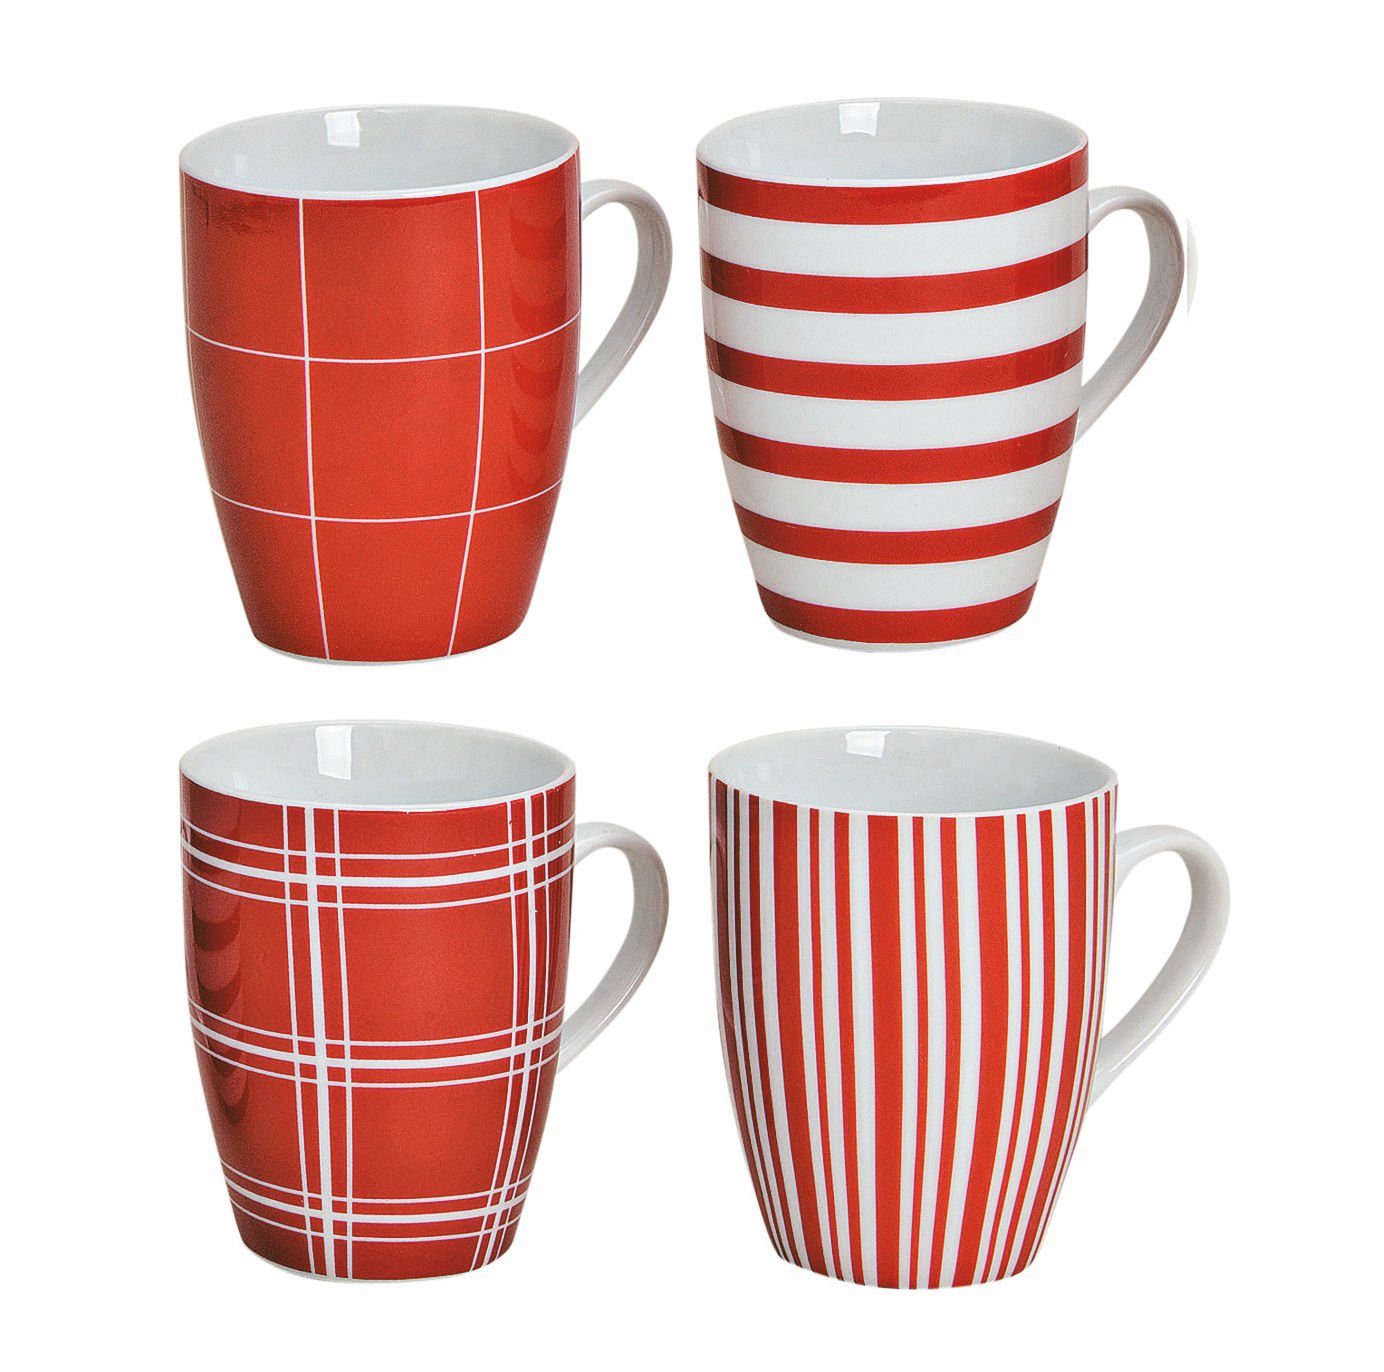 Spetebo Tafelservice Porzellan Kaffeebecher 4er Set - rot / weiß (4-tlg), 6 Personen, Porzellan, Kaffee und Tee Tassen für ca. 250 ml | Tafelservice